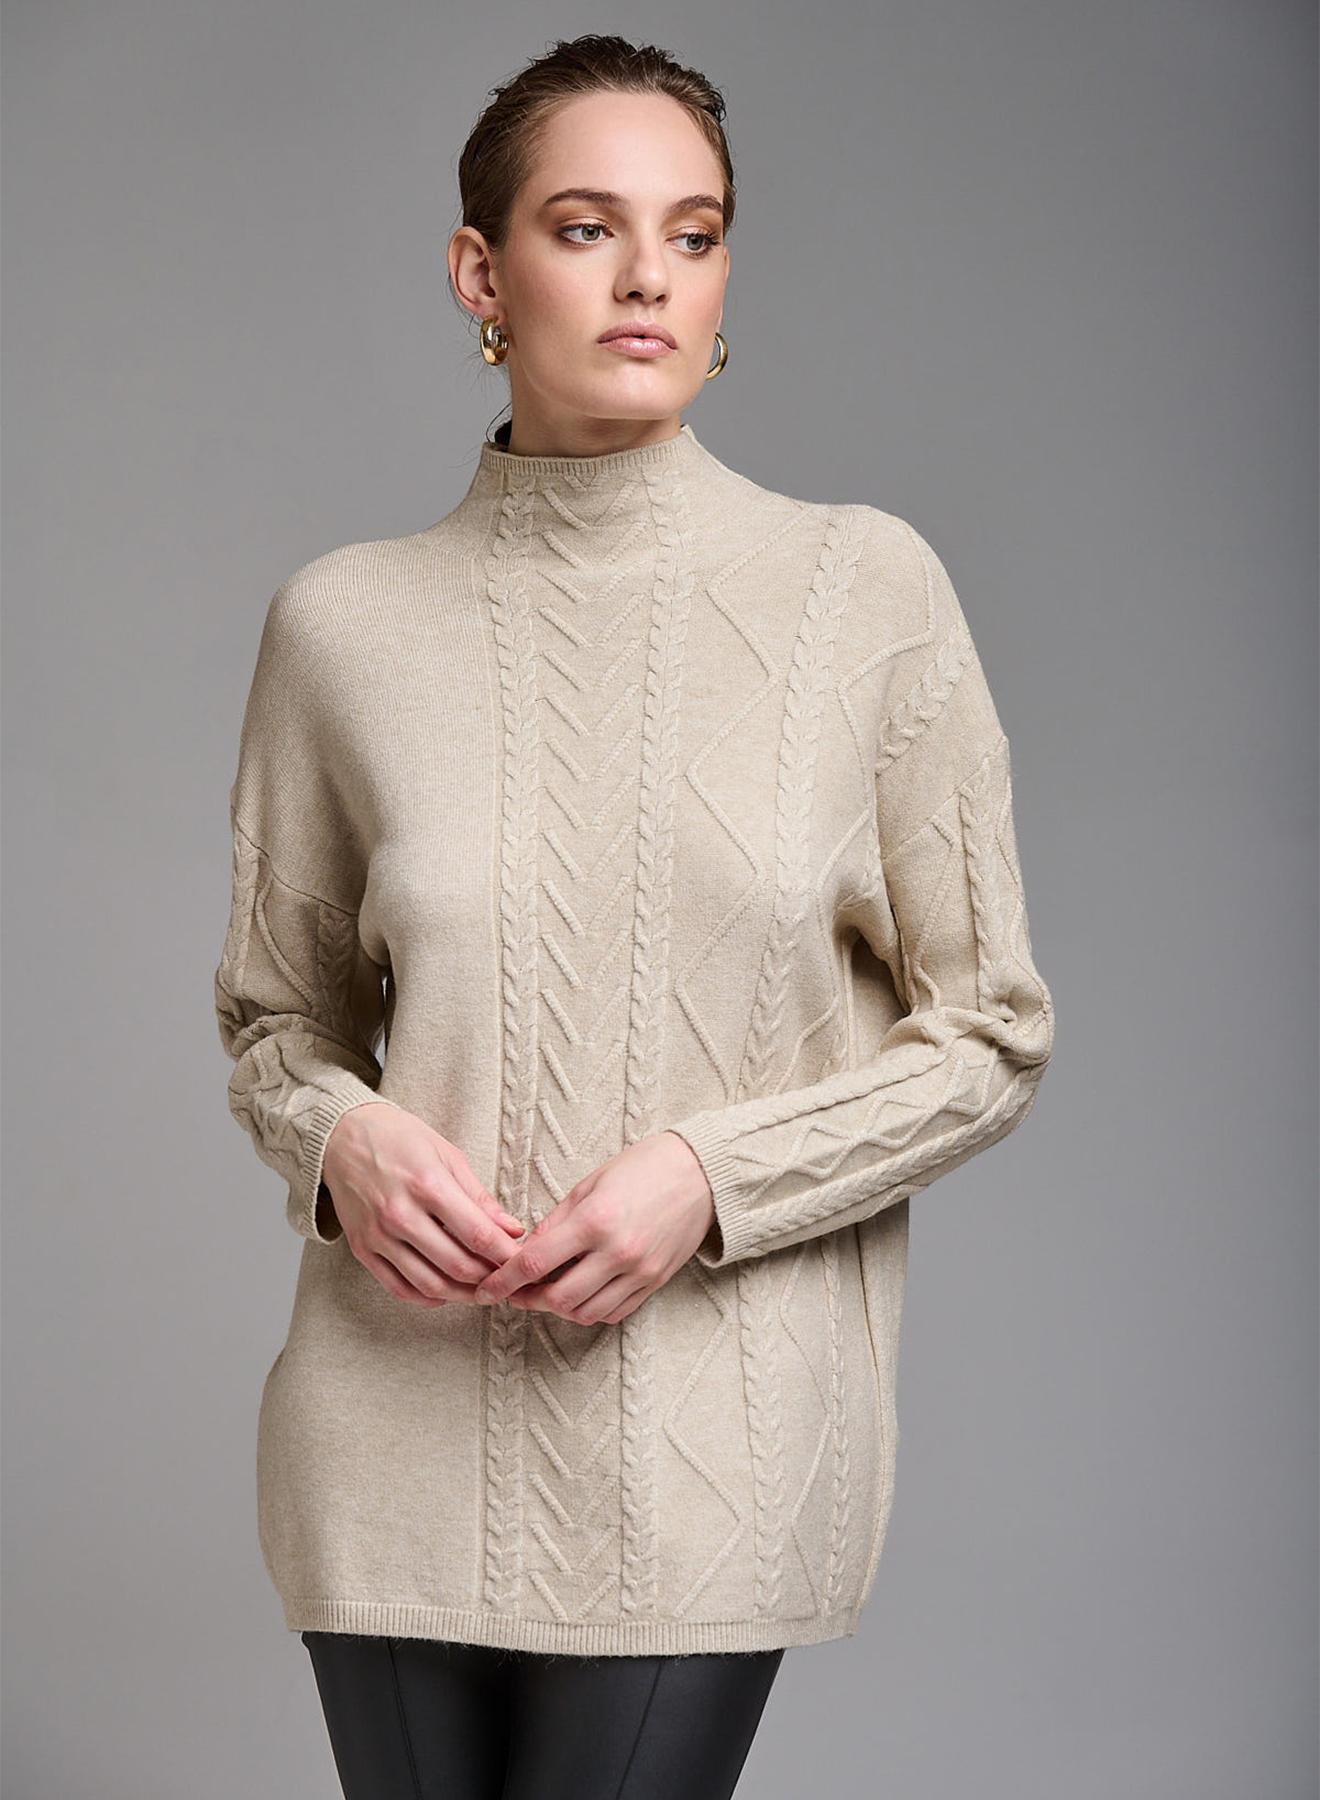 Half-turtleneck sweater with textured details - 2